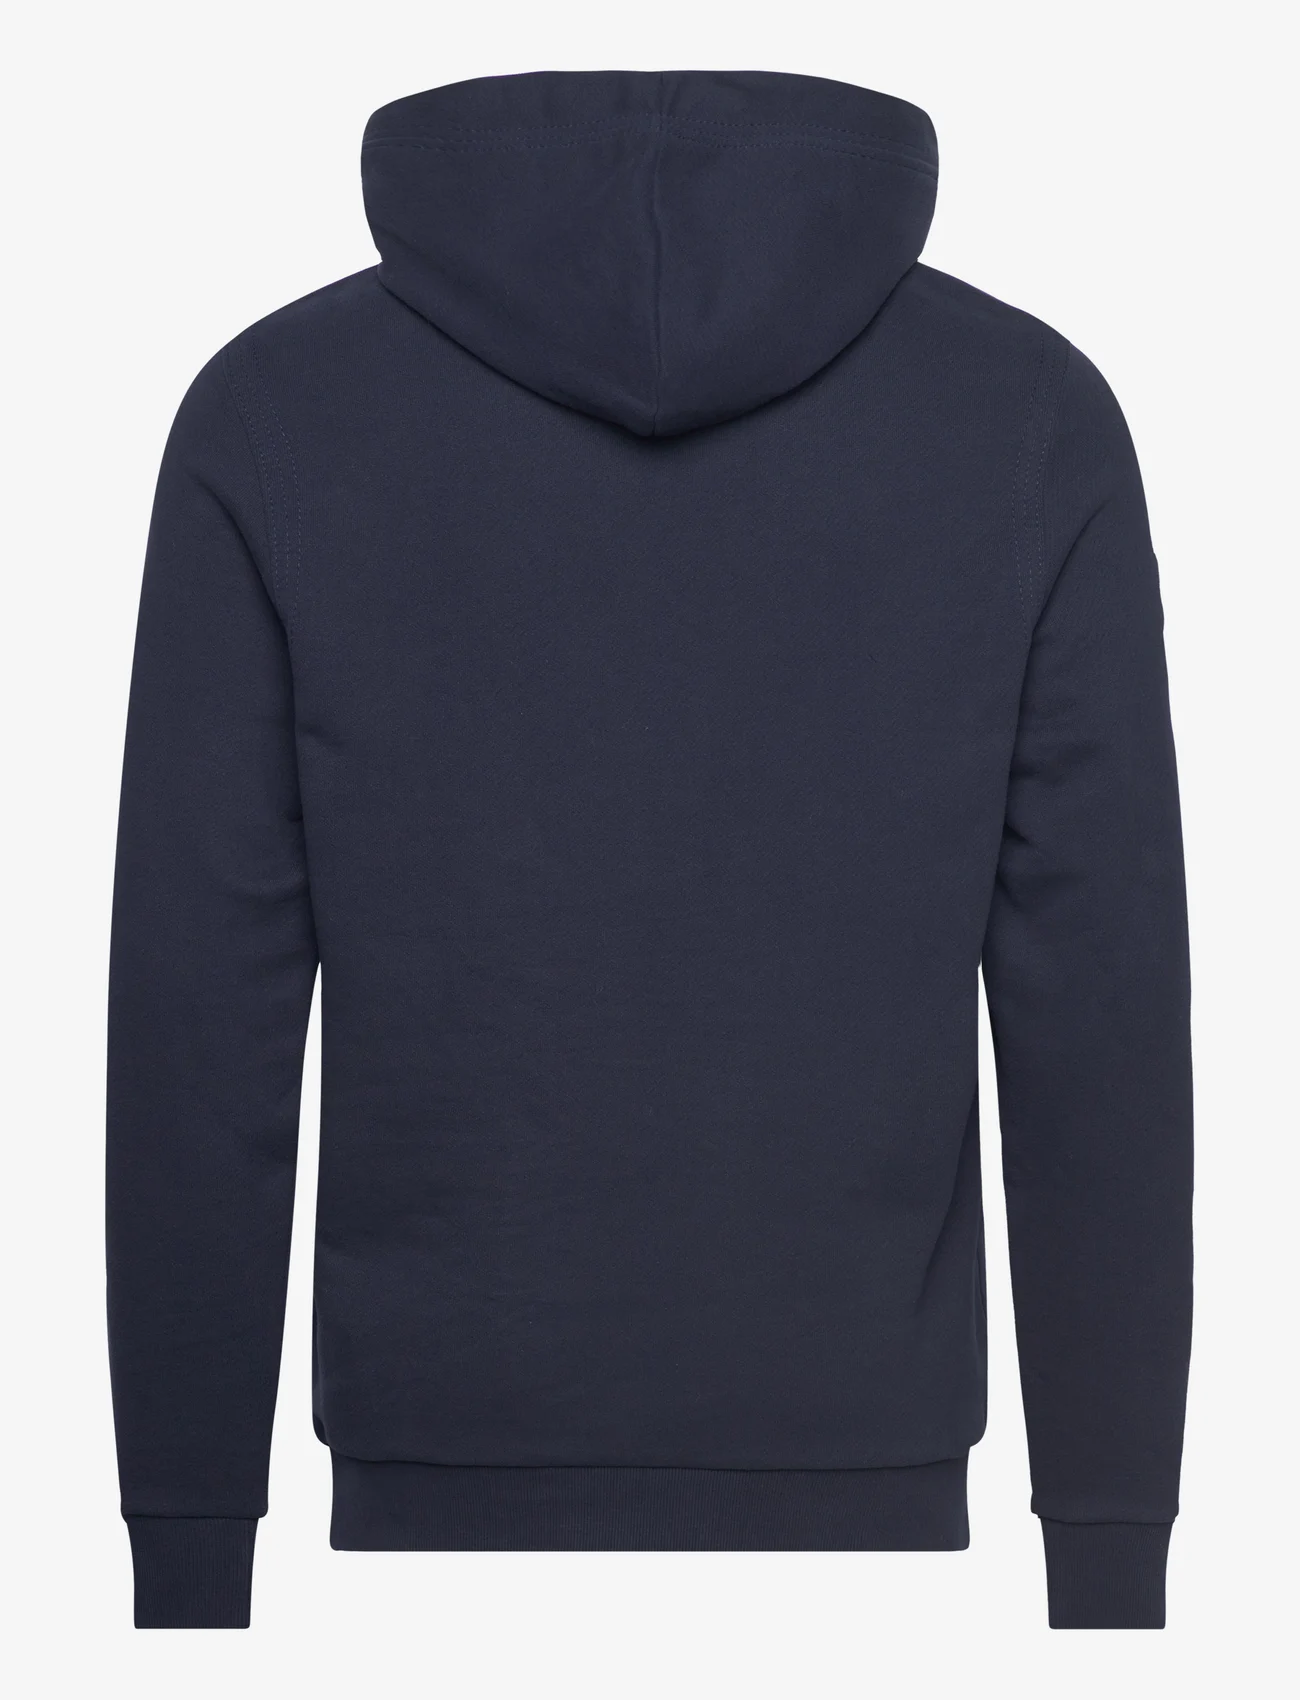 Tom Tailor - logo hoodie - kapuzenpullover - sky captain blue - 1